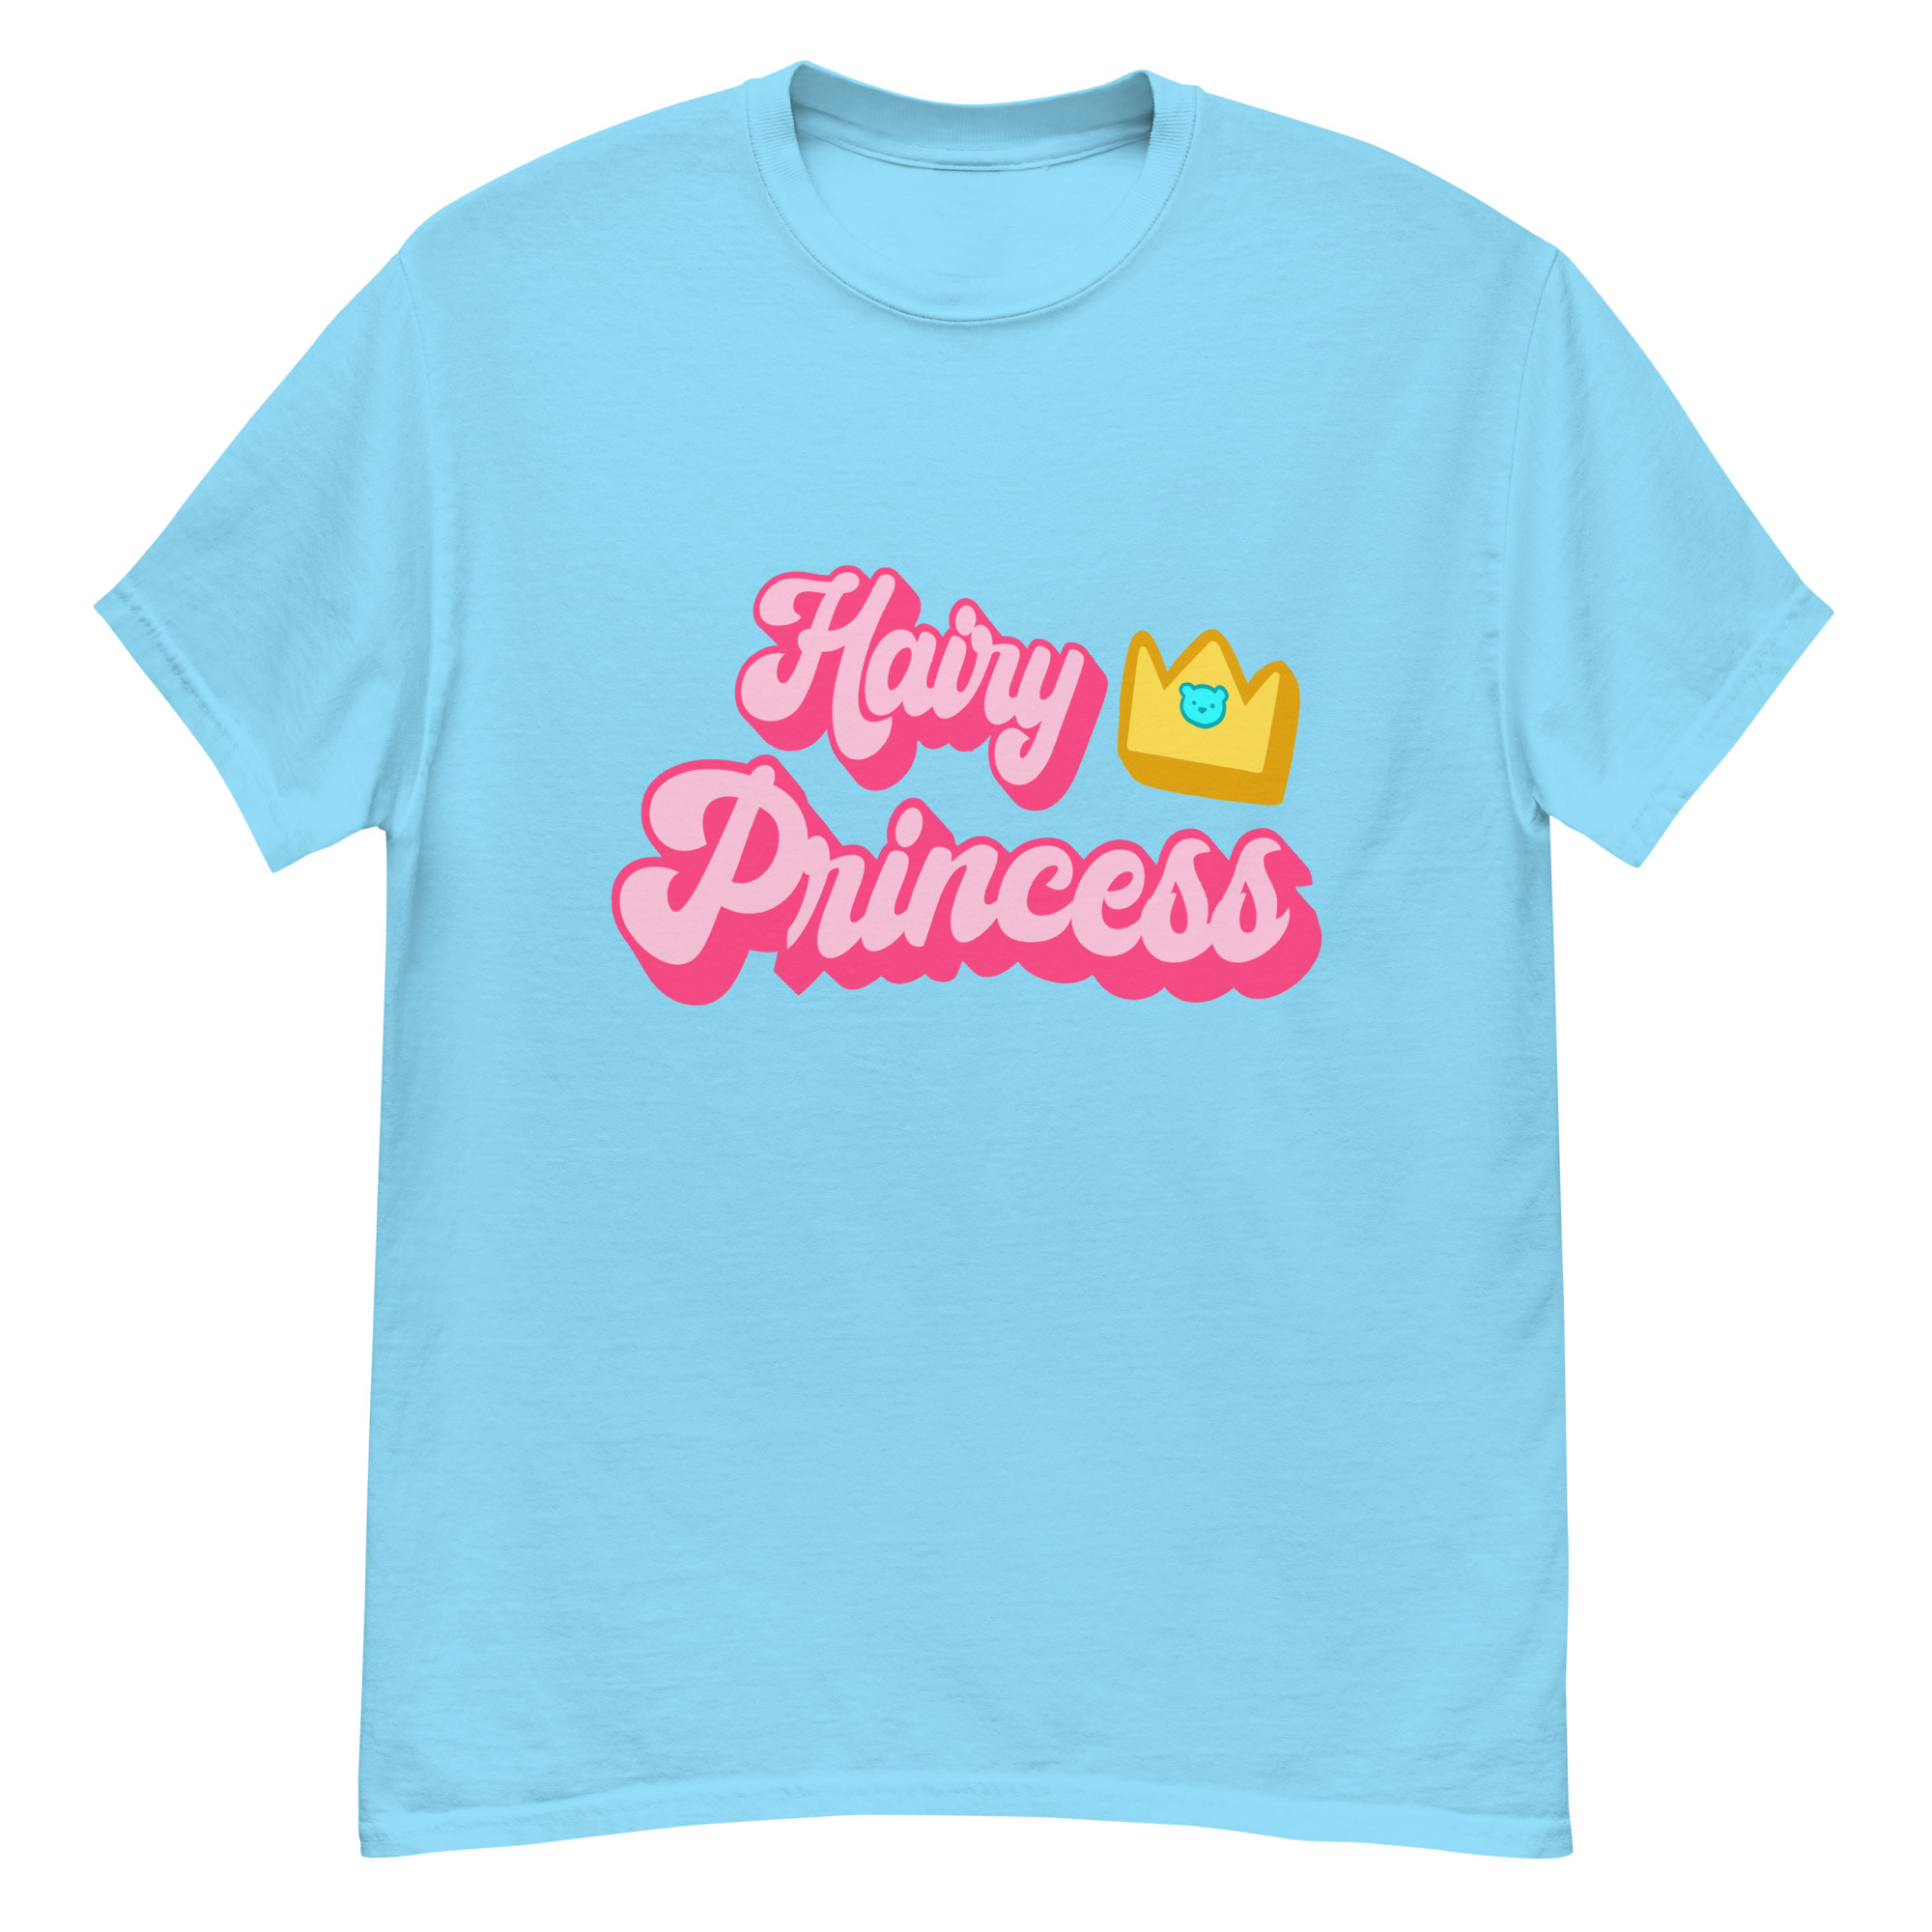 Featured image for “Hairy Princess - Men's classic Gildan tee”